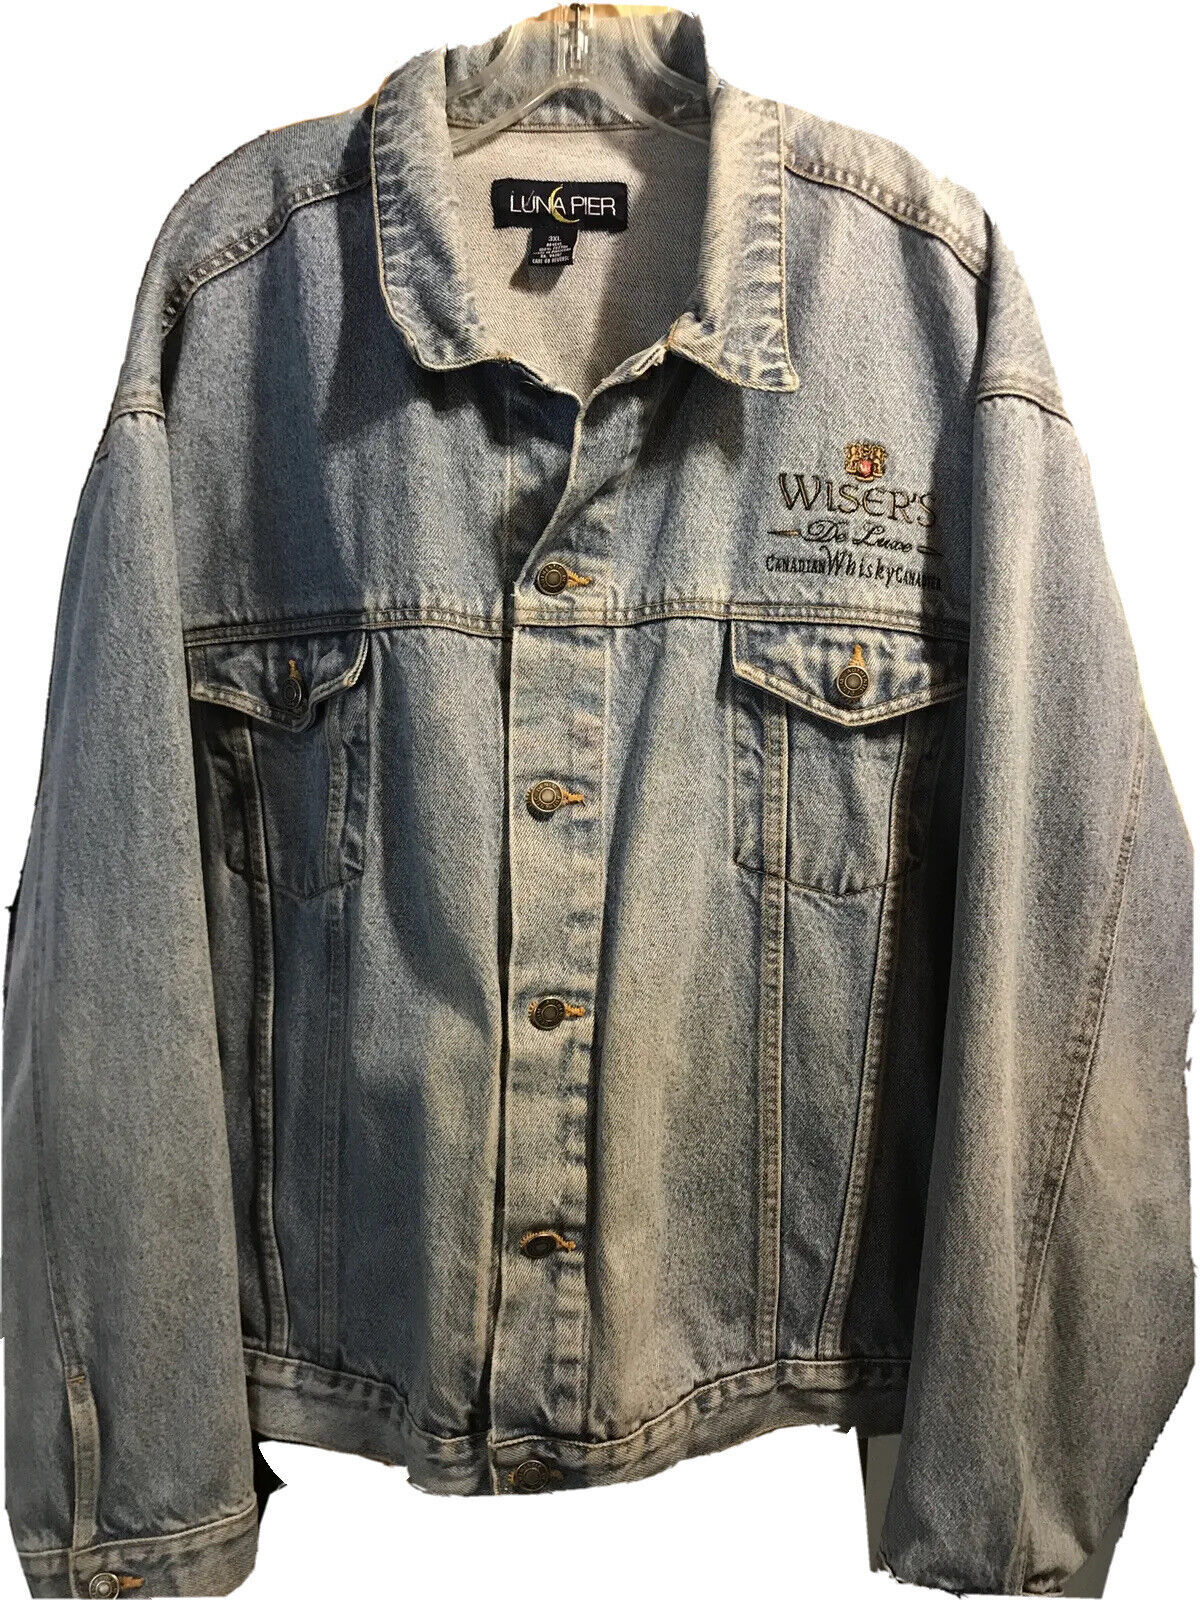 Primary image for Luna Pier Vintage Wiser’s Men’s 3XL Denim Long Sleeve Button Down Cotton Jacket